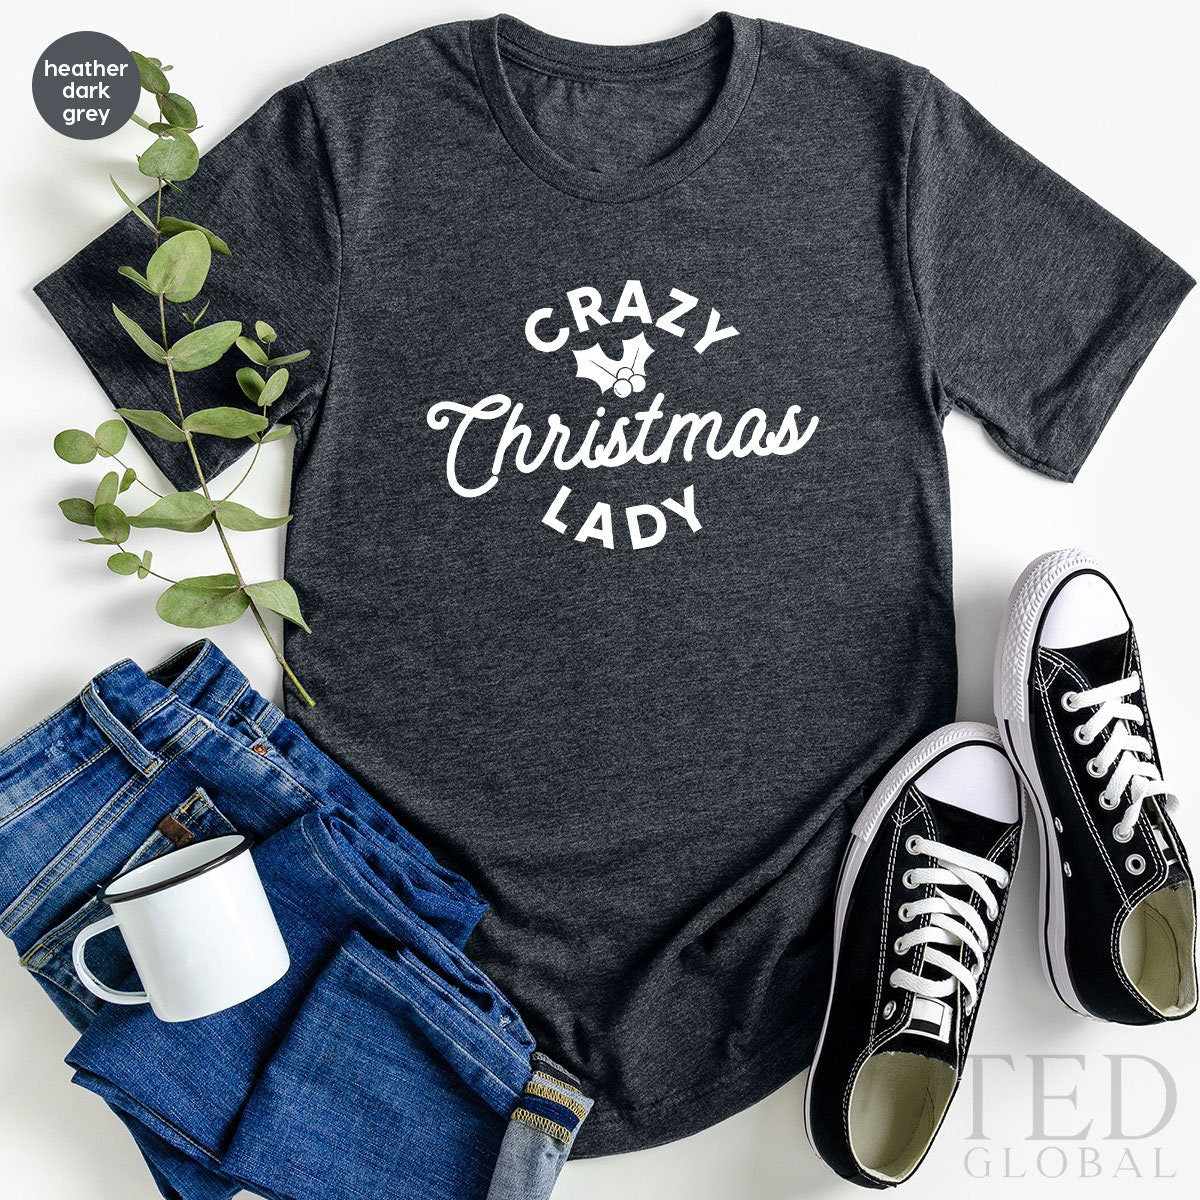 Cute Crazy T-Shirt, Christmas Lady T Shirt, Happy Christmas Shirts, Holiday Outfit  Shirt, Family Christmas TShirt, Gift For Christmas - Fastdeliverytees.com